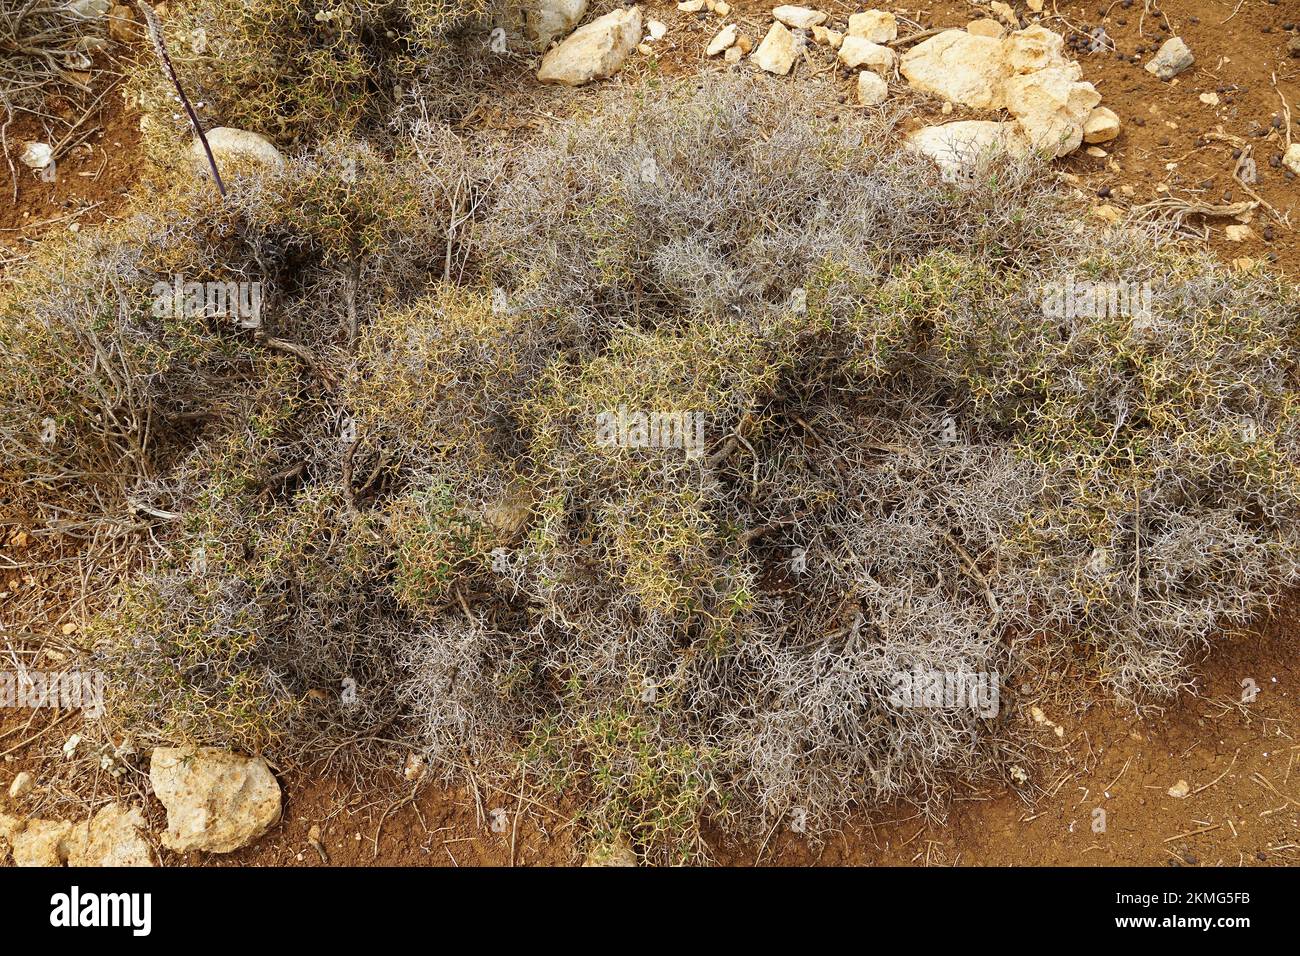 prickly, spiny, or thorny burnet, Sarcopoterium spinosum, Gramvousa Peninsula, Chersonesos Gramvousas, Crete, Greece, Europe Stock Photo